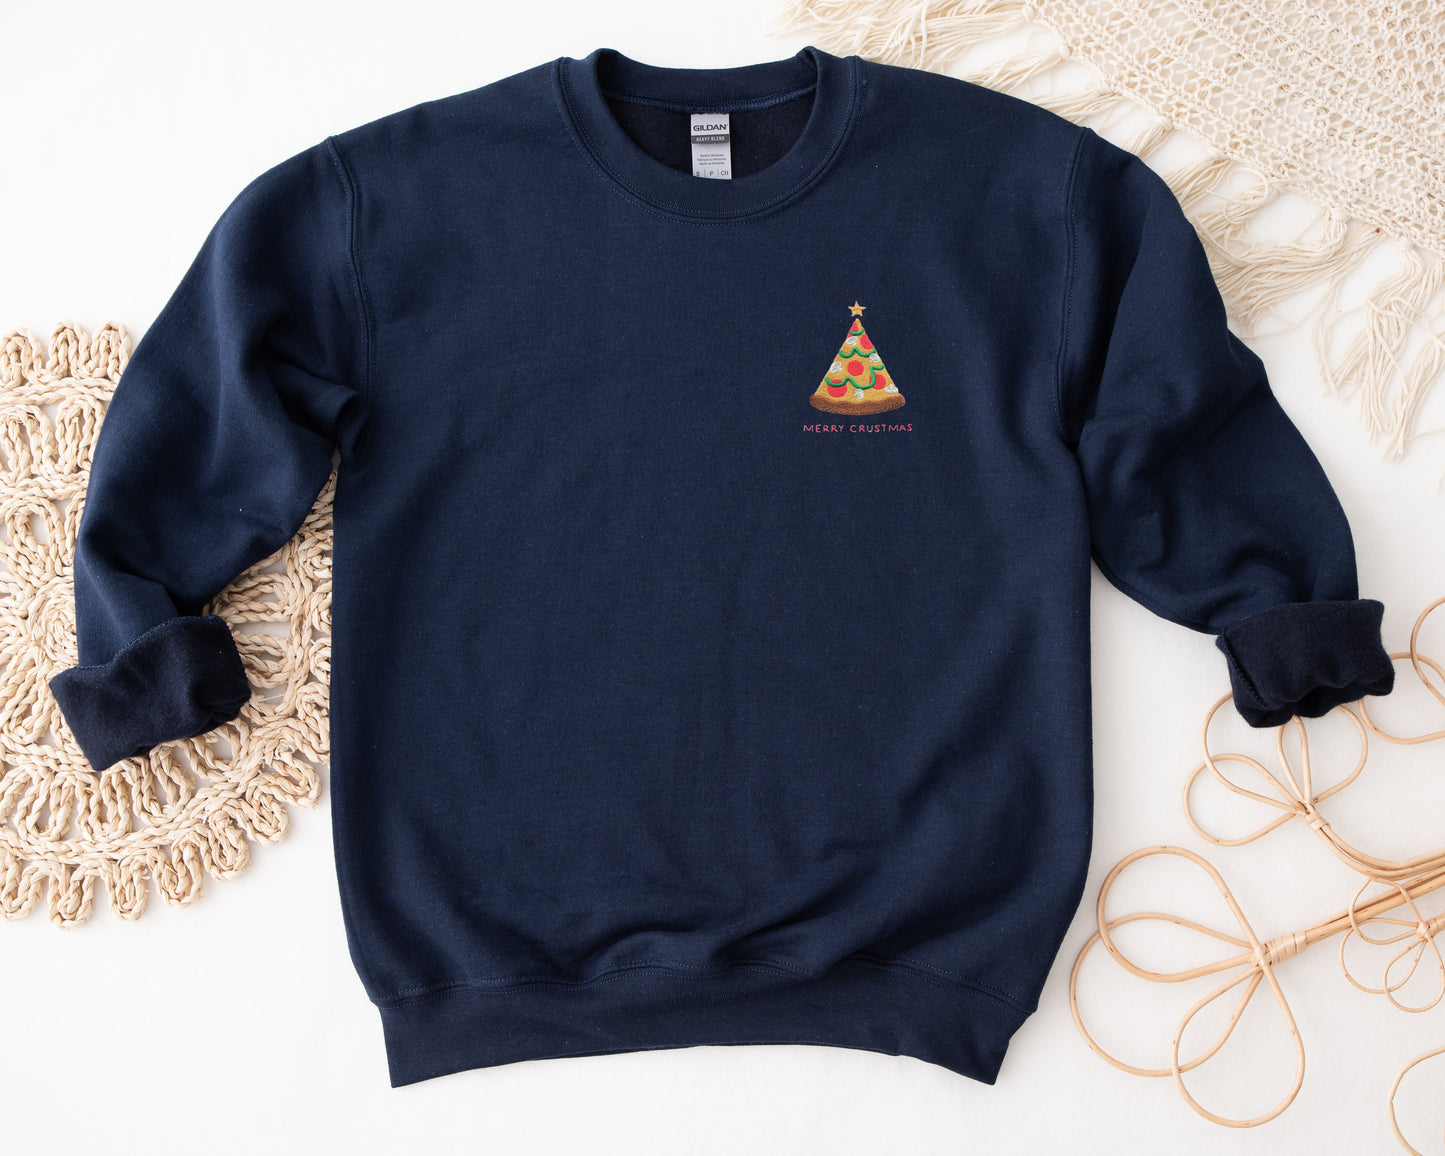 Merry Crustmas Pizza Tree Embroidered Adult Unisex Crewneck Sweatshirt